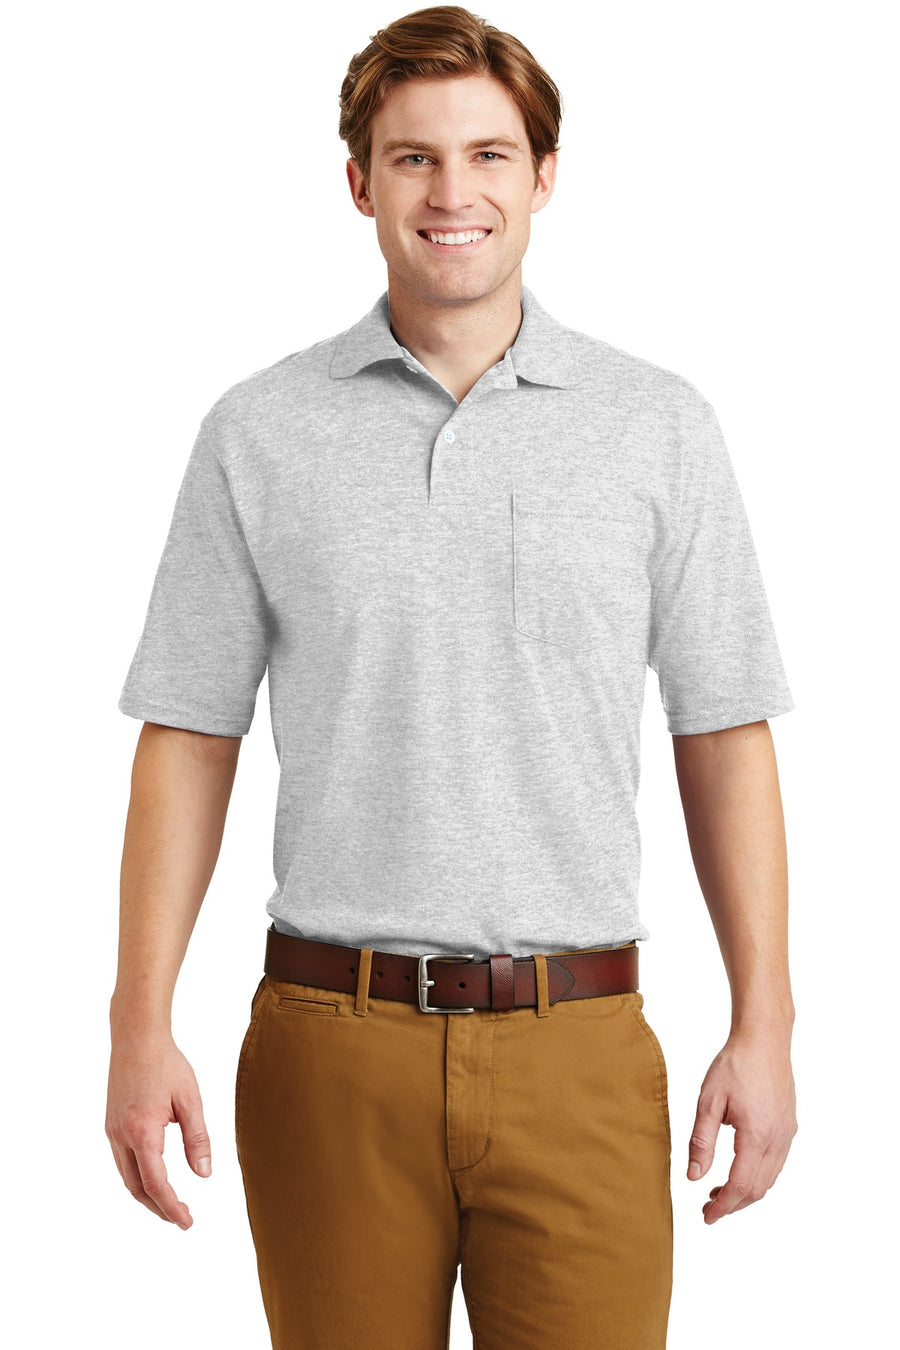 Jerzees -SpotShield 5.4-Ounce Jersey Knit Sport Shirt with Pocket.